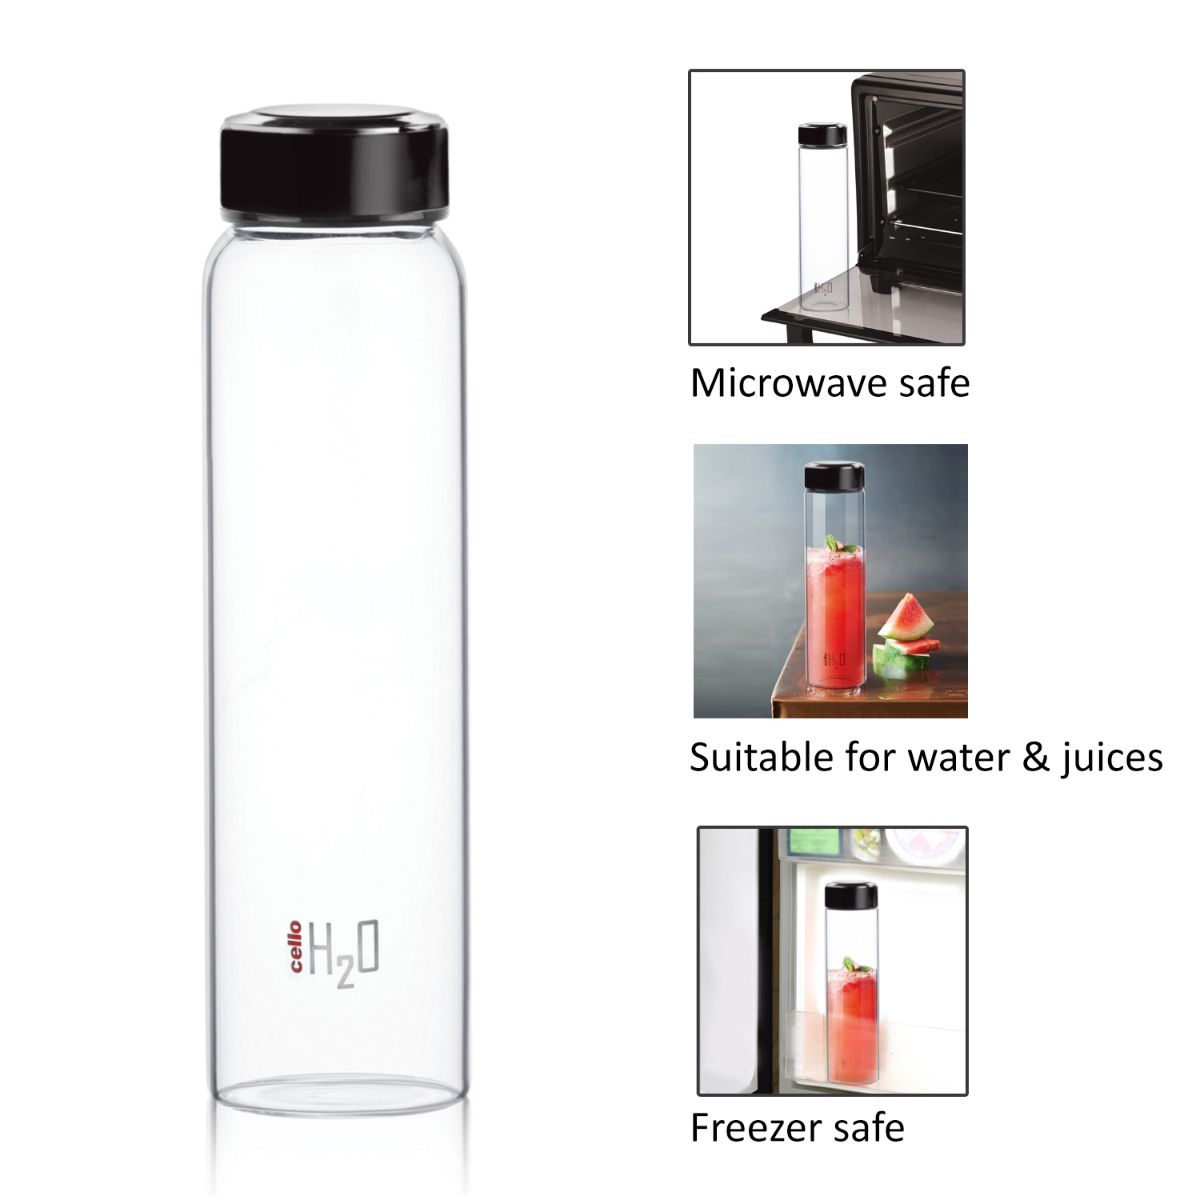 H2O Borosilicate Glass Water Bottle, 1000ml Black / 1000ml